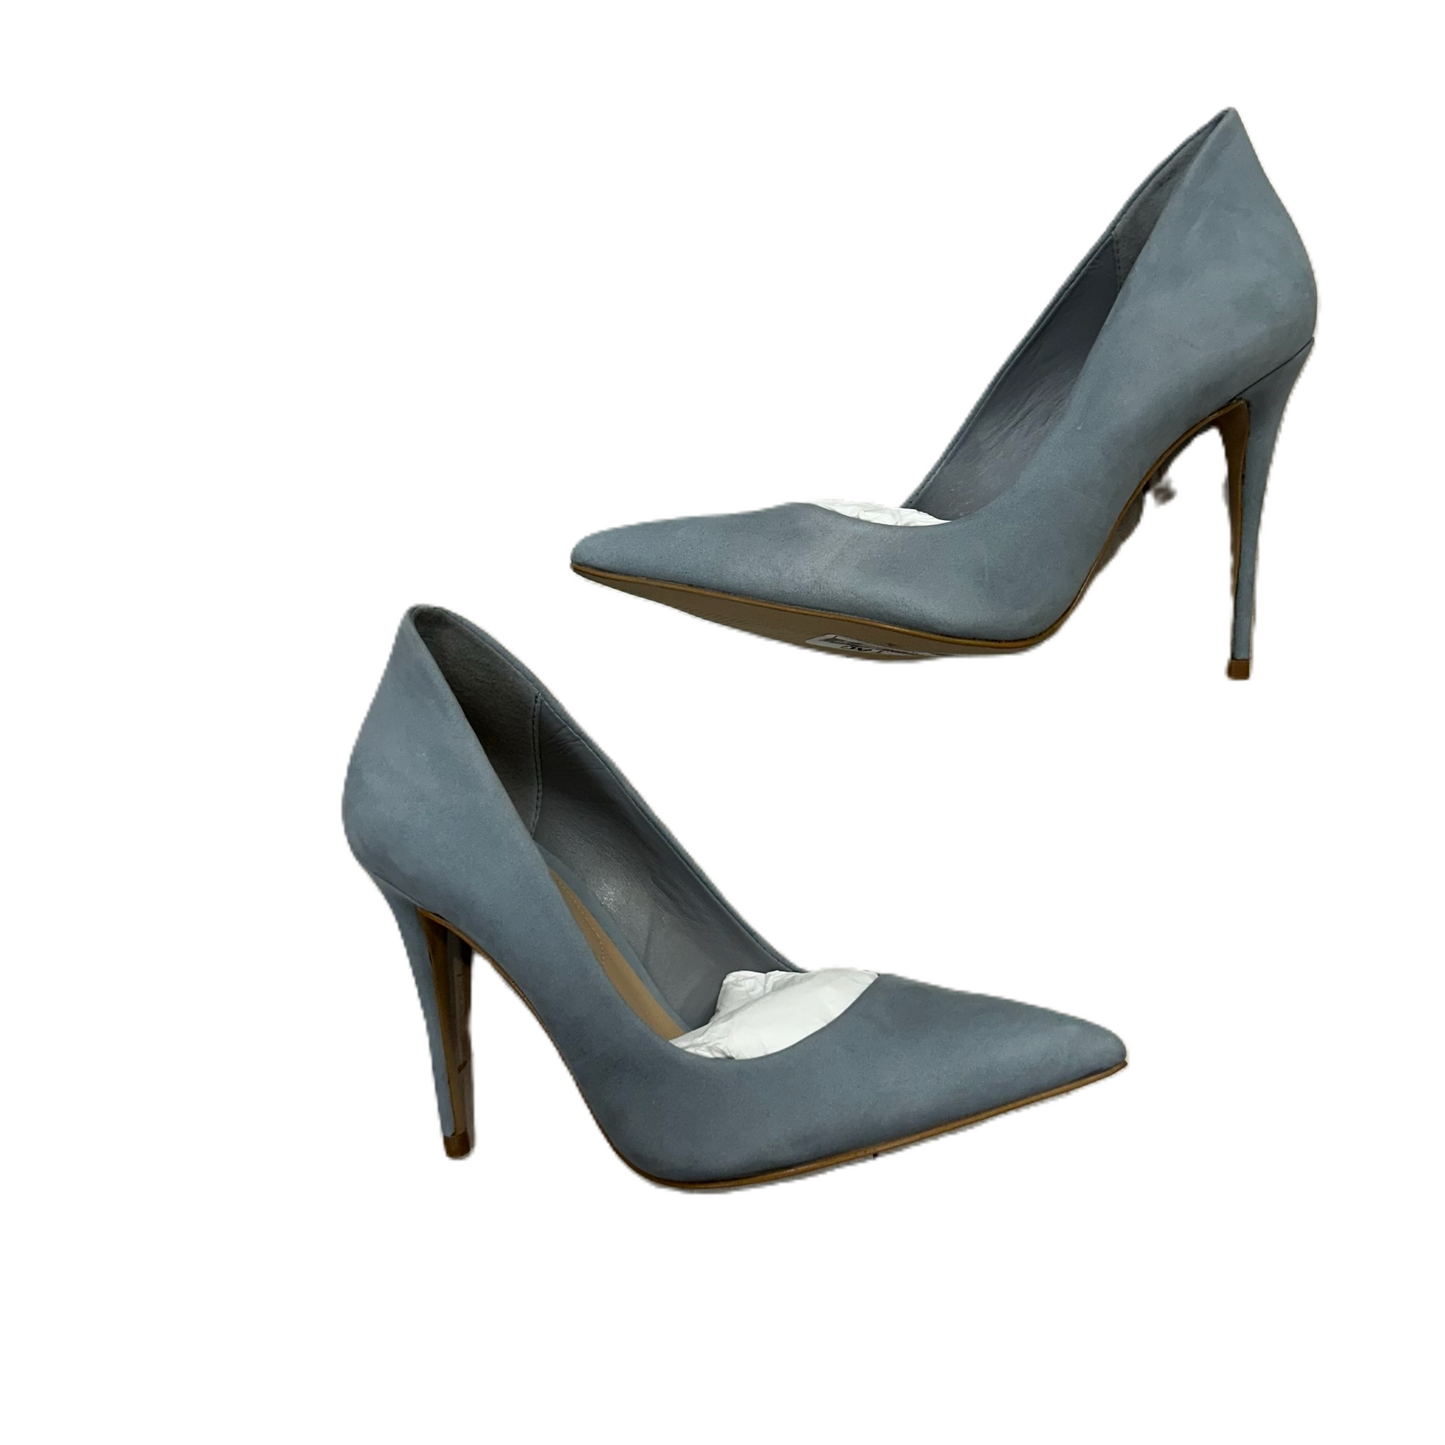 Blue Shoes Heels Stiletto By Aldo, Size: 5